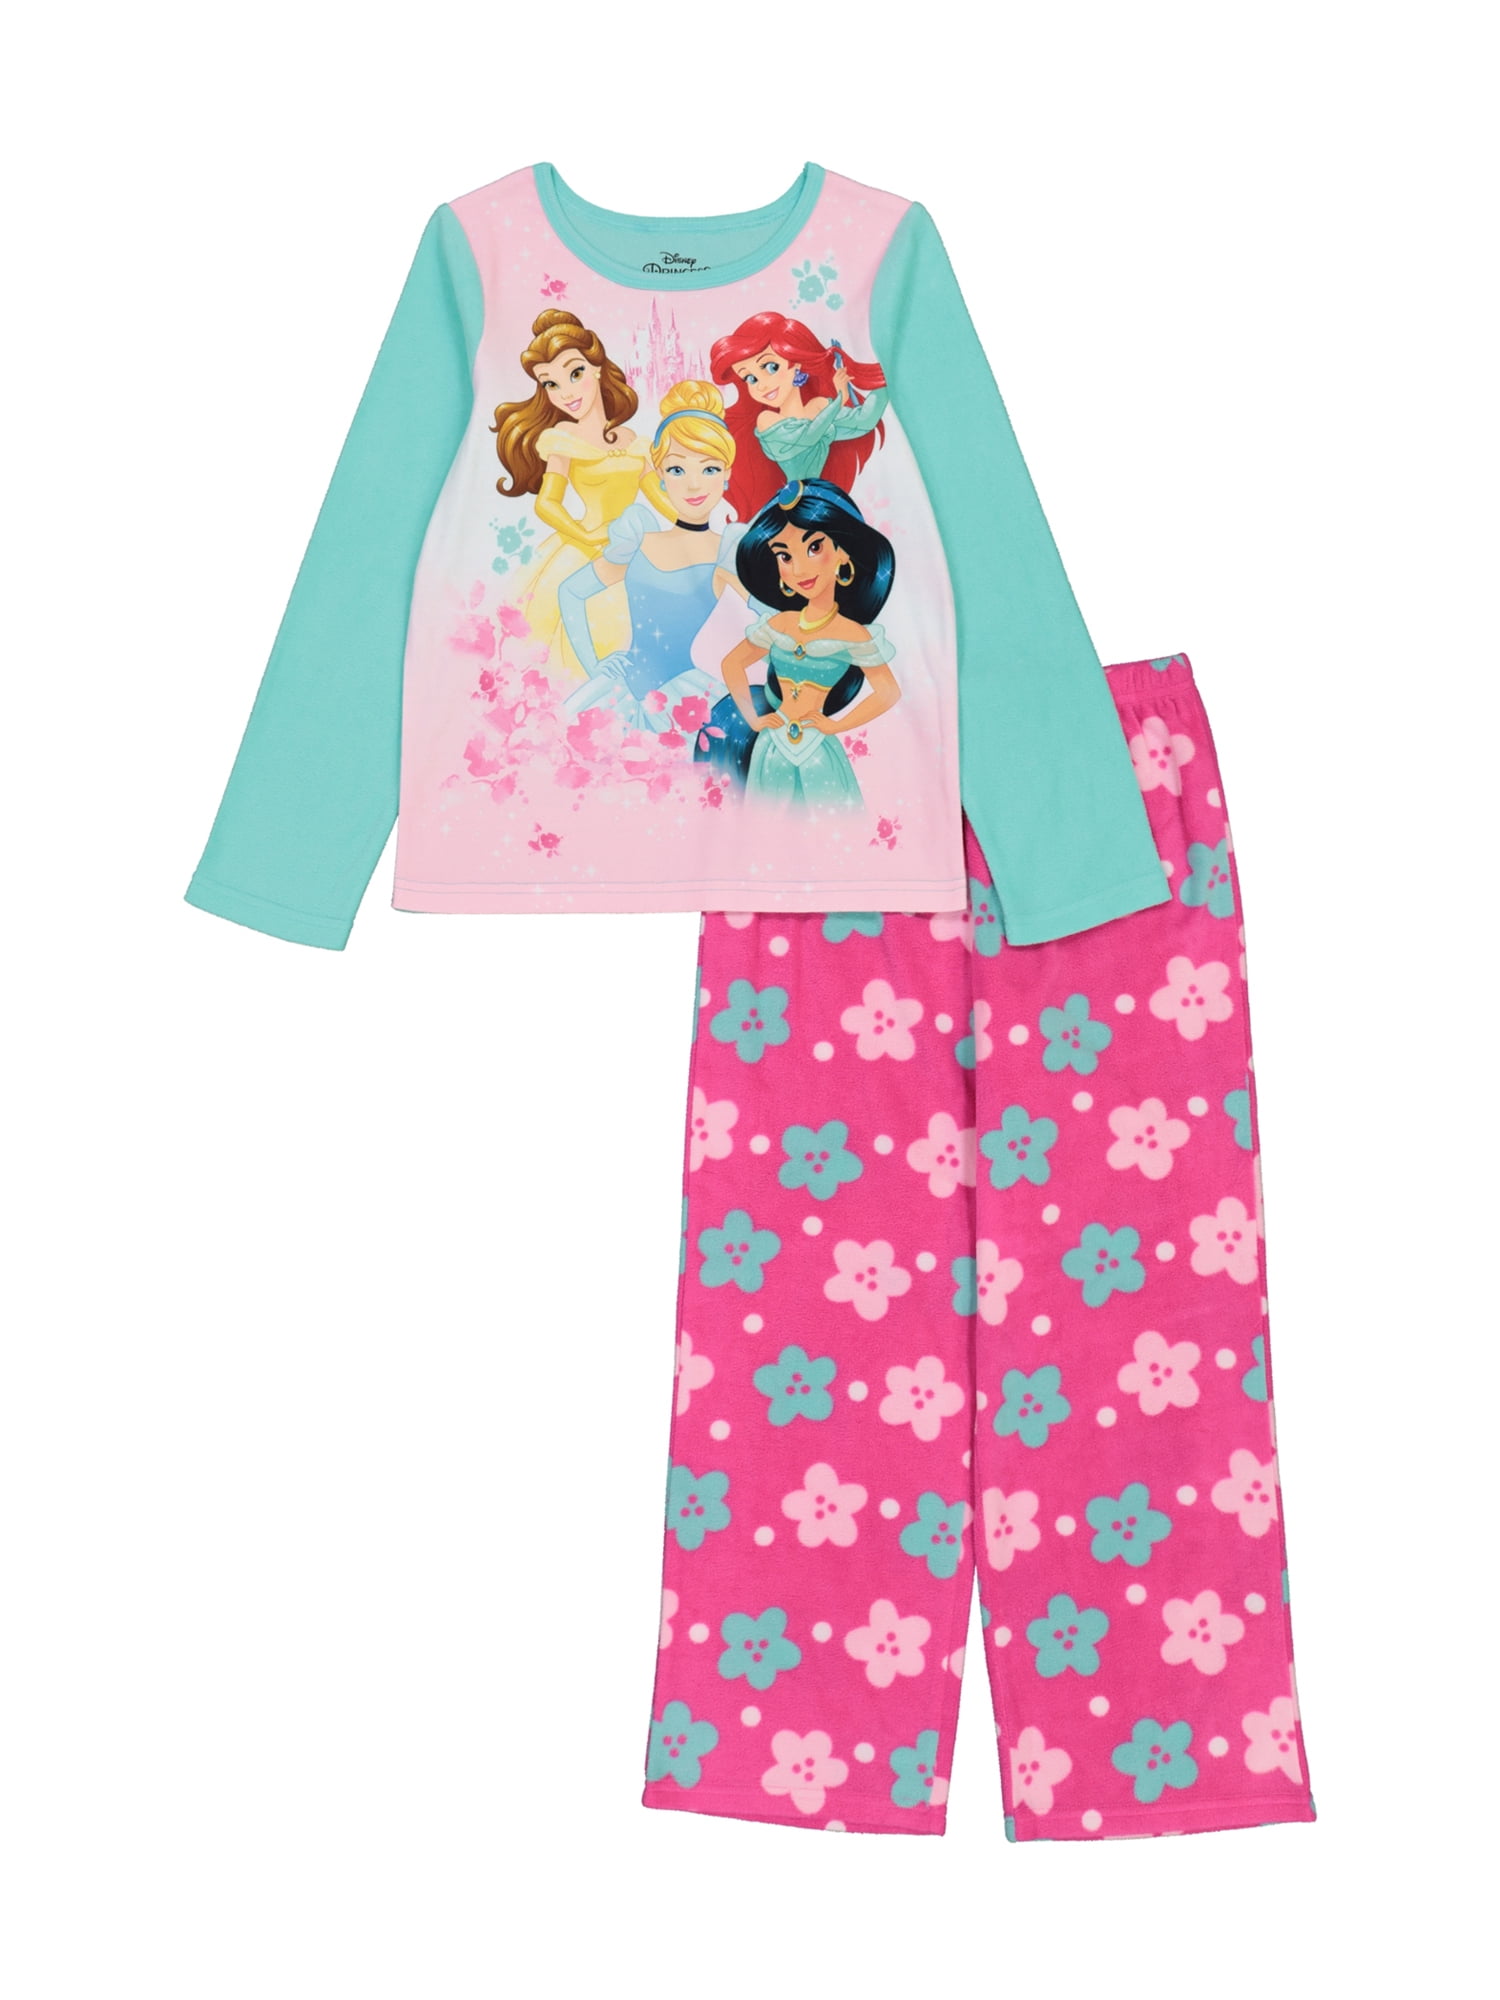 Girls Aladdin Pyjamas Long PJs Nightwear Pyjama Set Age 18 Months Up To 5 Years 